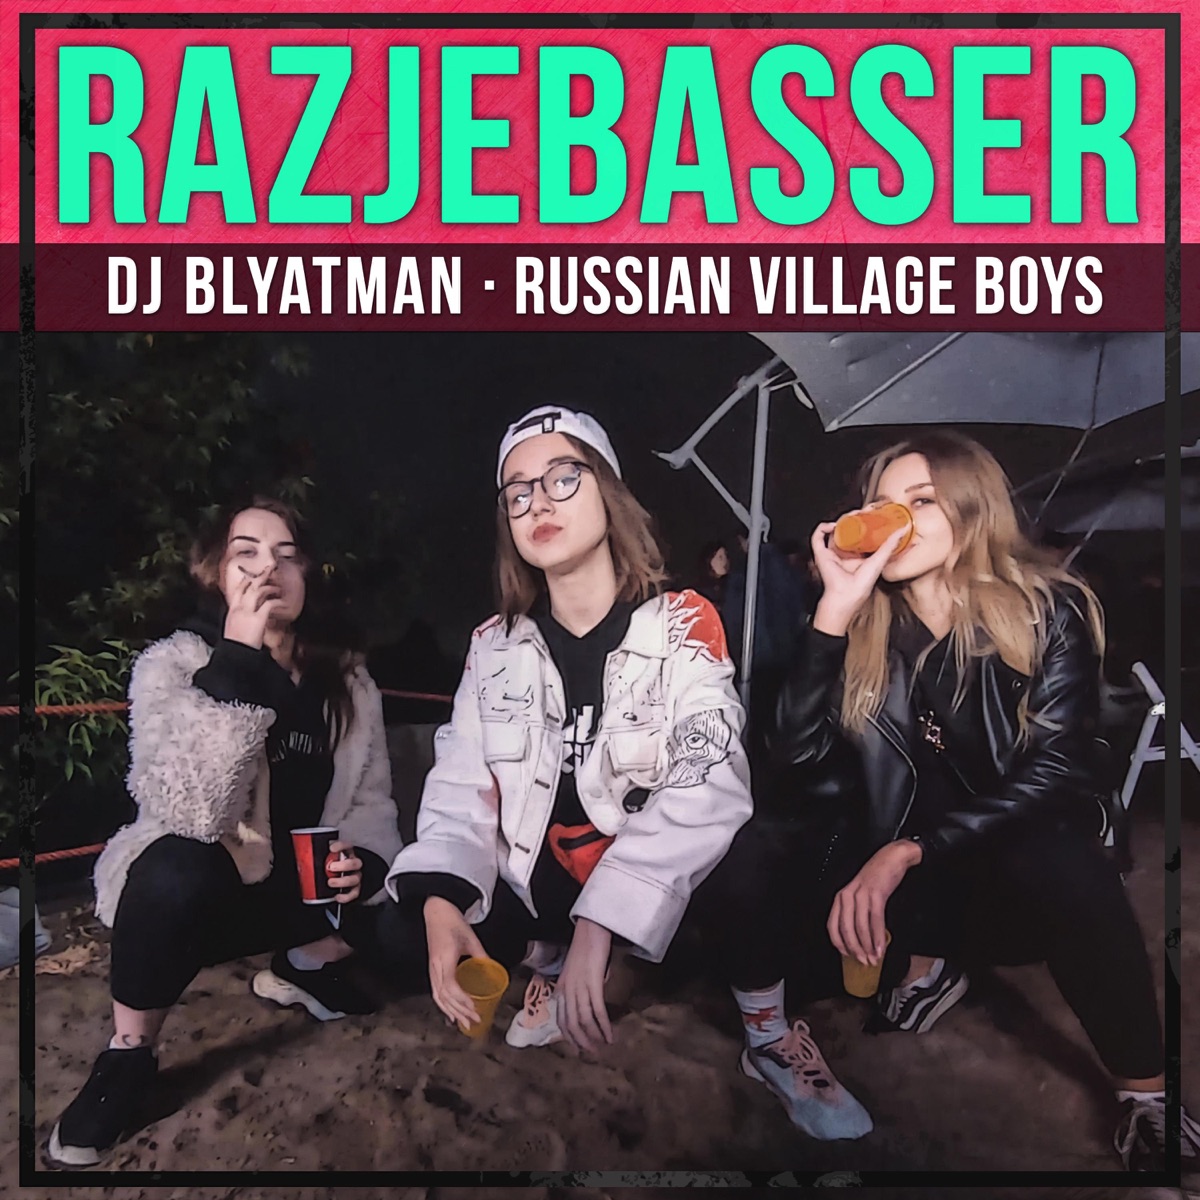 Respectvol sterk aanvaarden Adidas - Single by Russian Village Boys & Mr. Polska on Apple Music